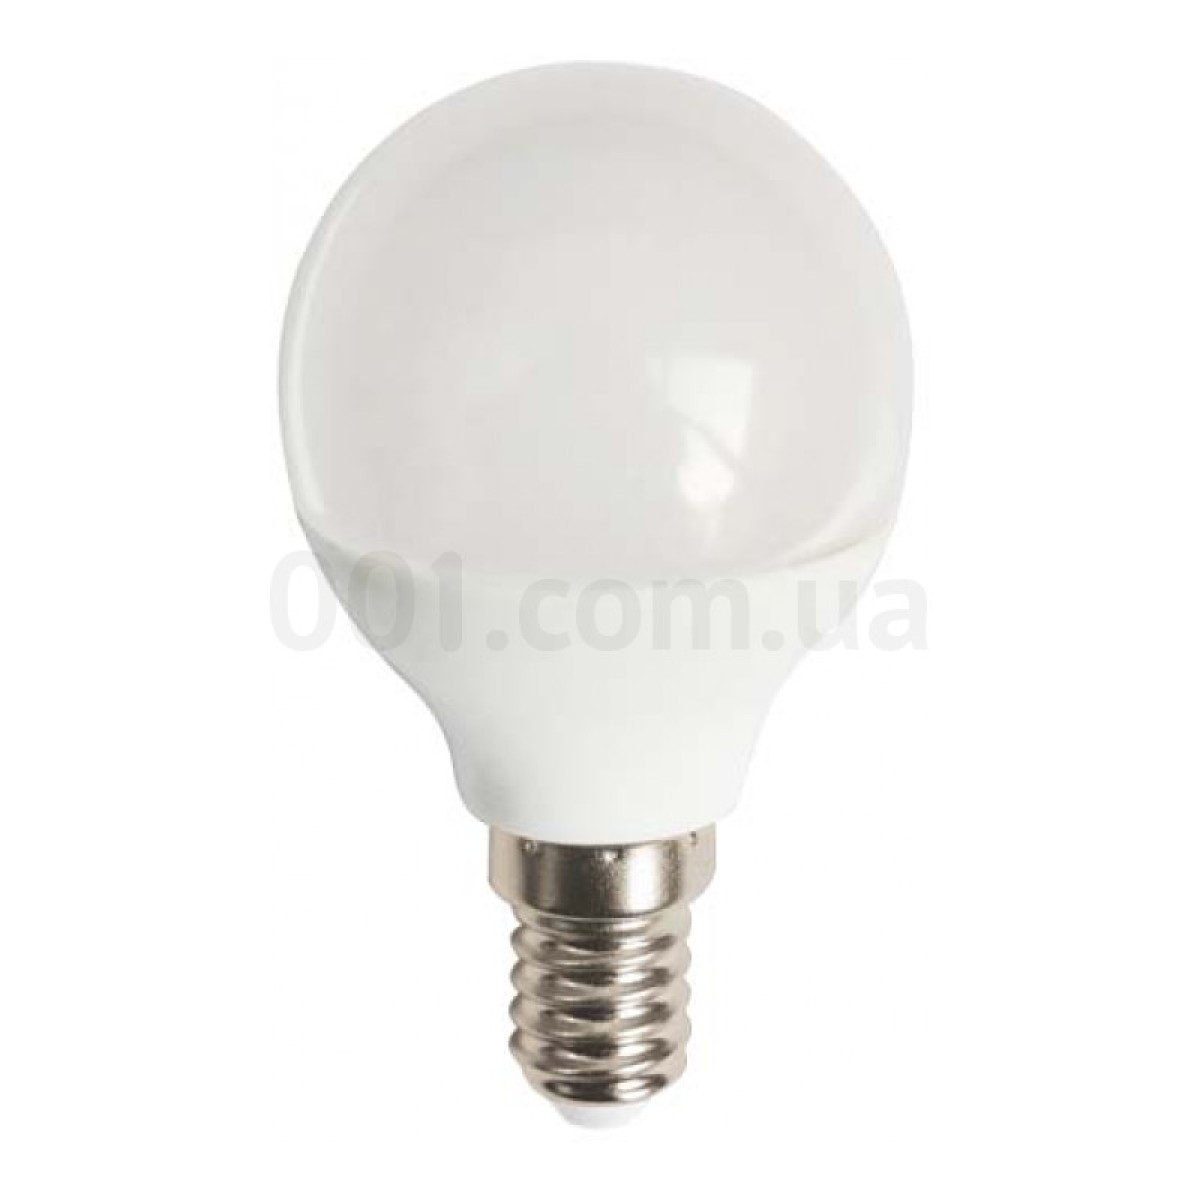 Светодиодная лампа LB-380 P45 (шар) 4Вт 4000K E14, Feron 256_256.jpg